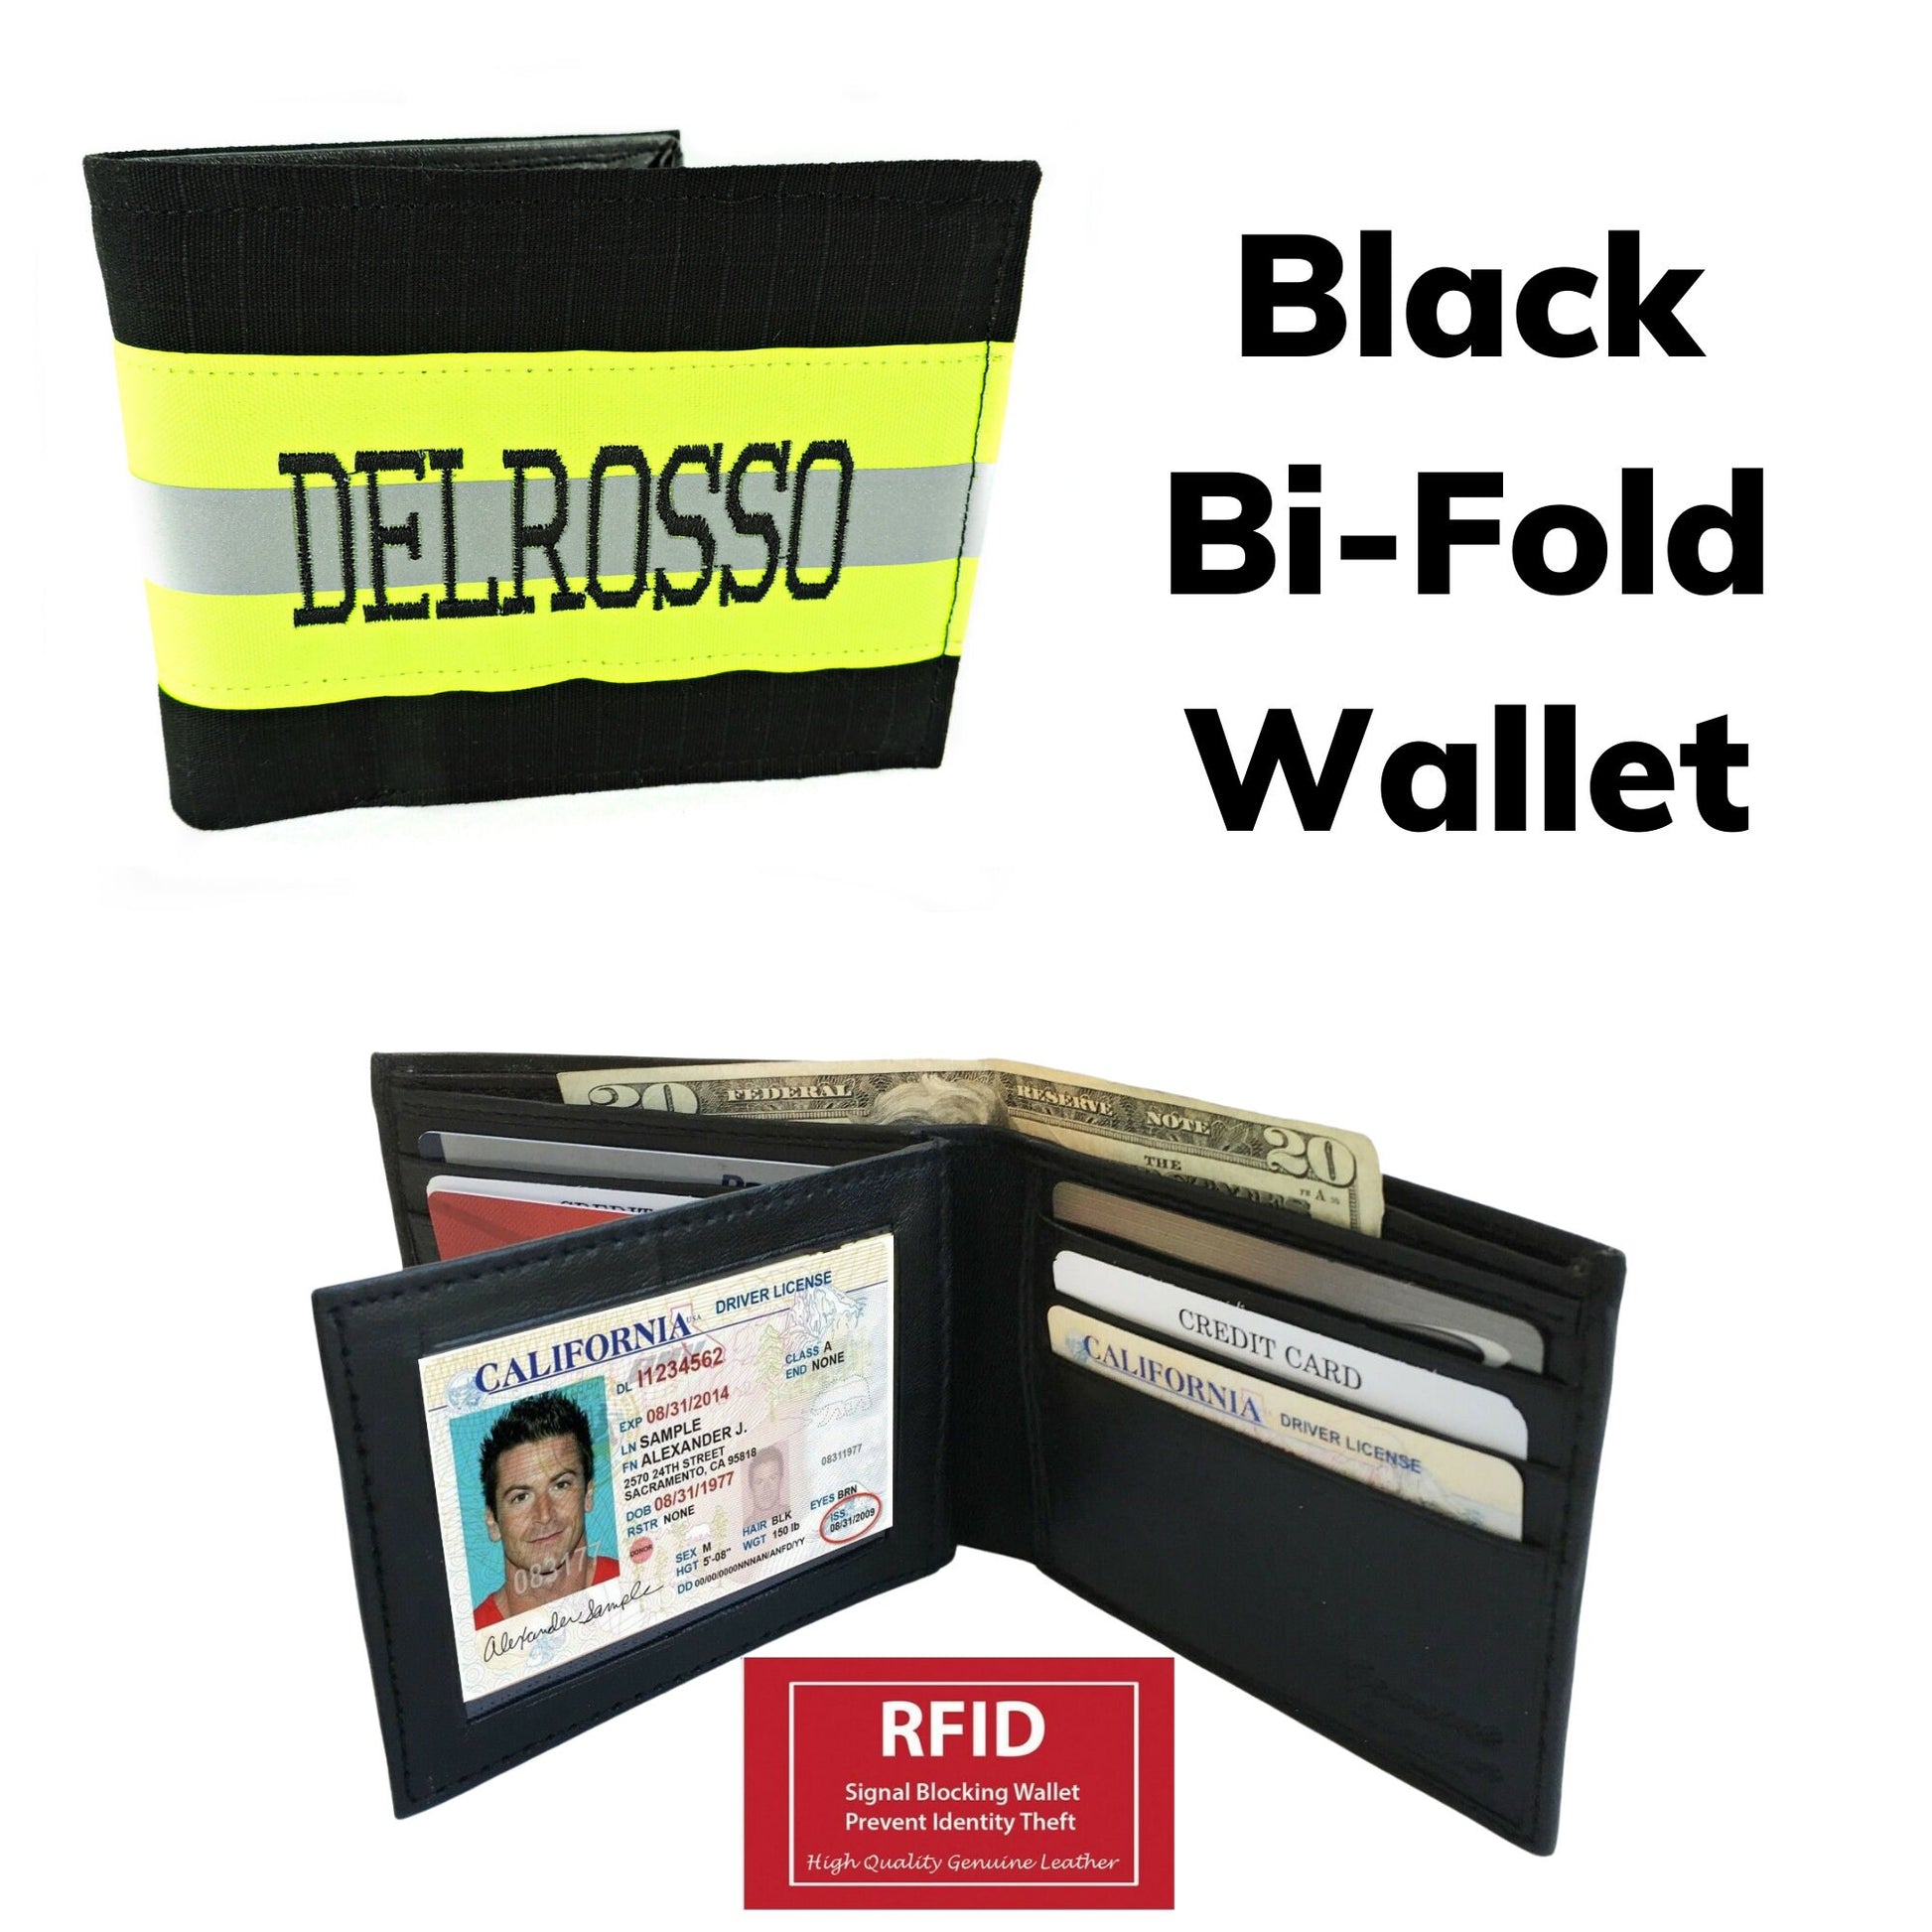 black bi-fold wallet with RFID